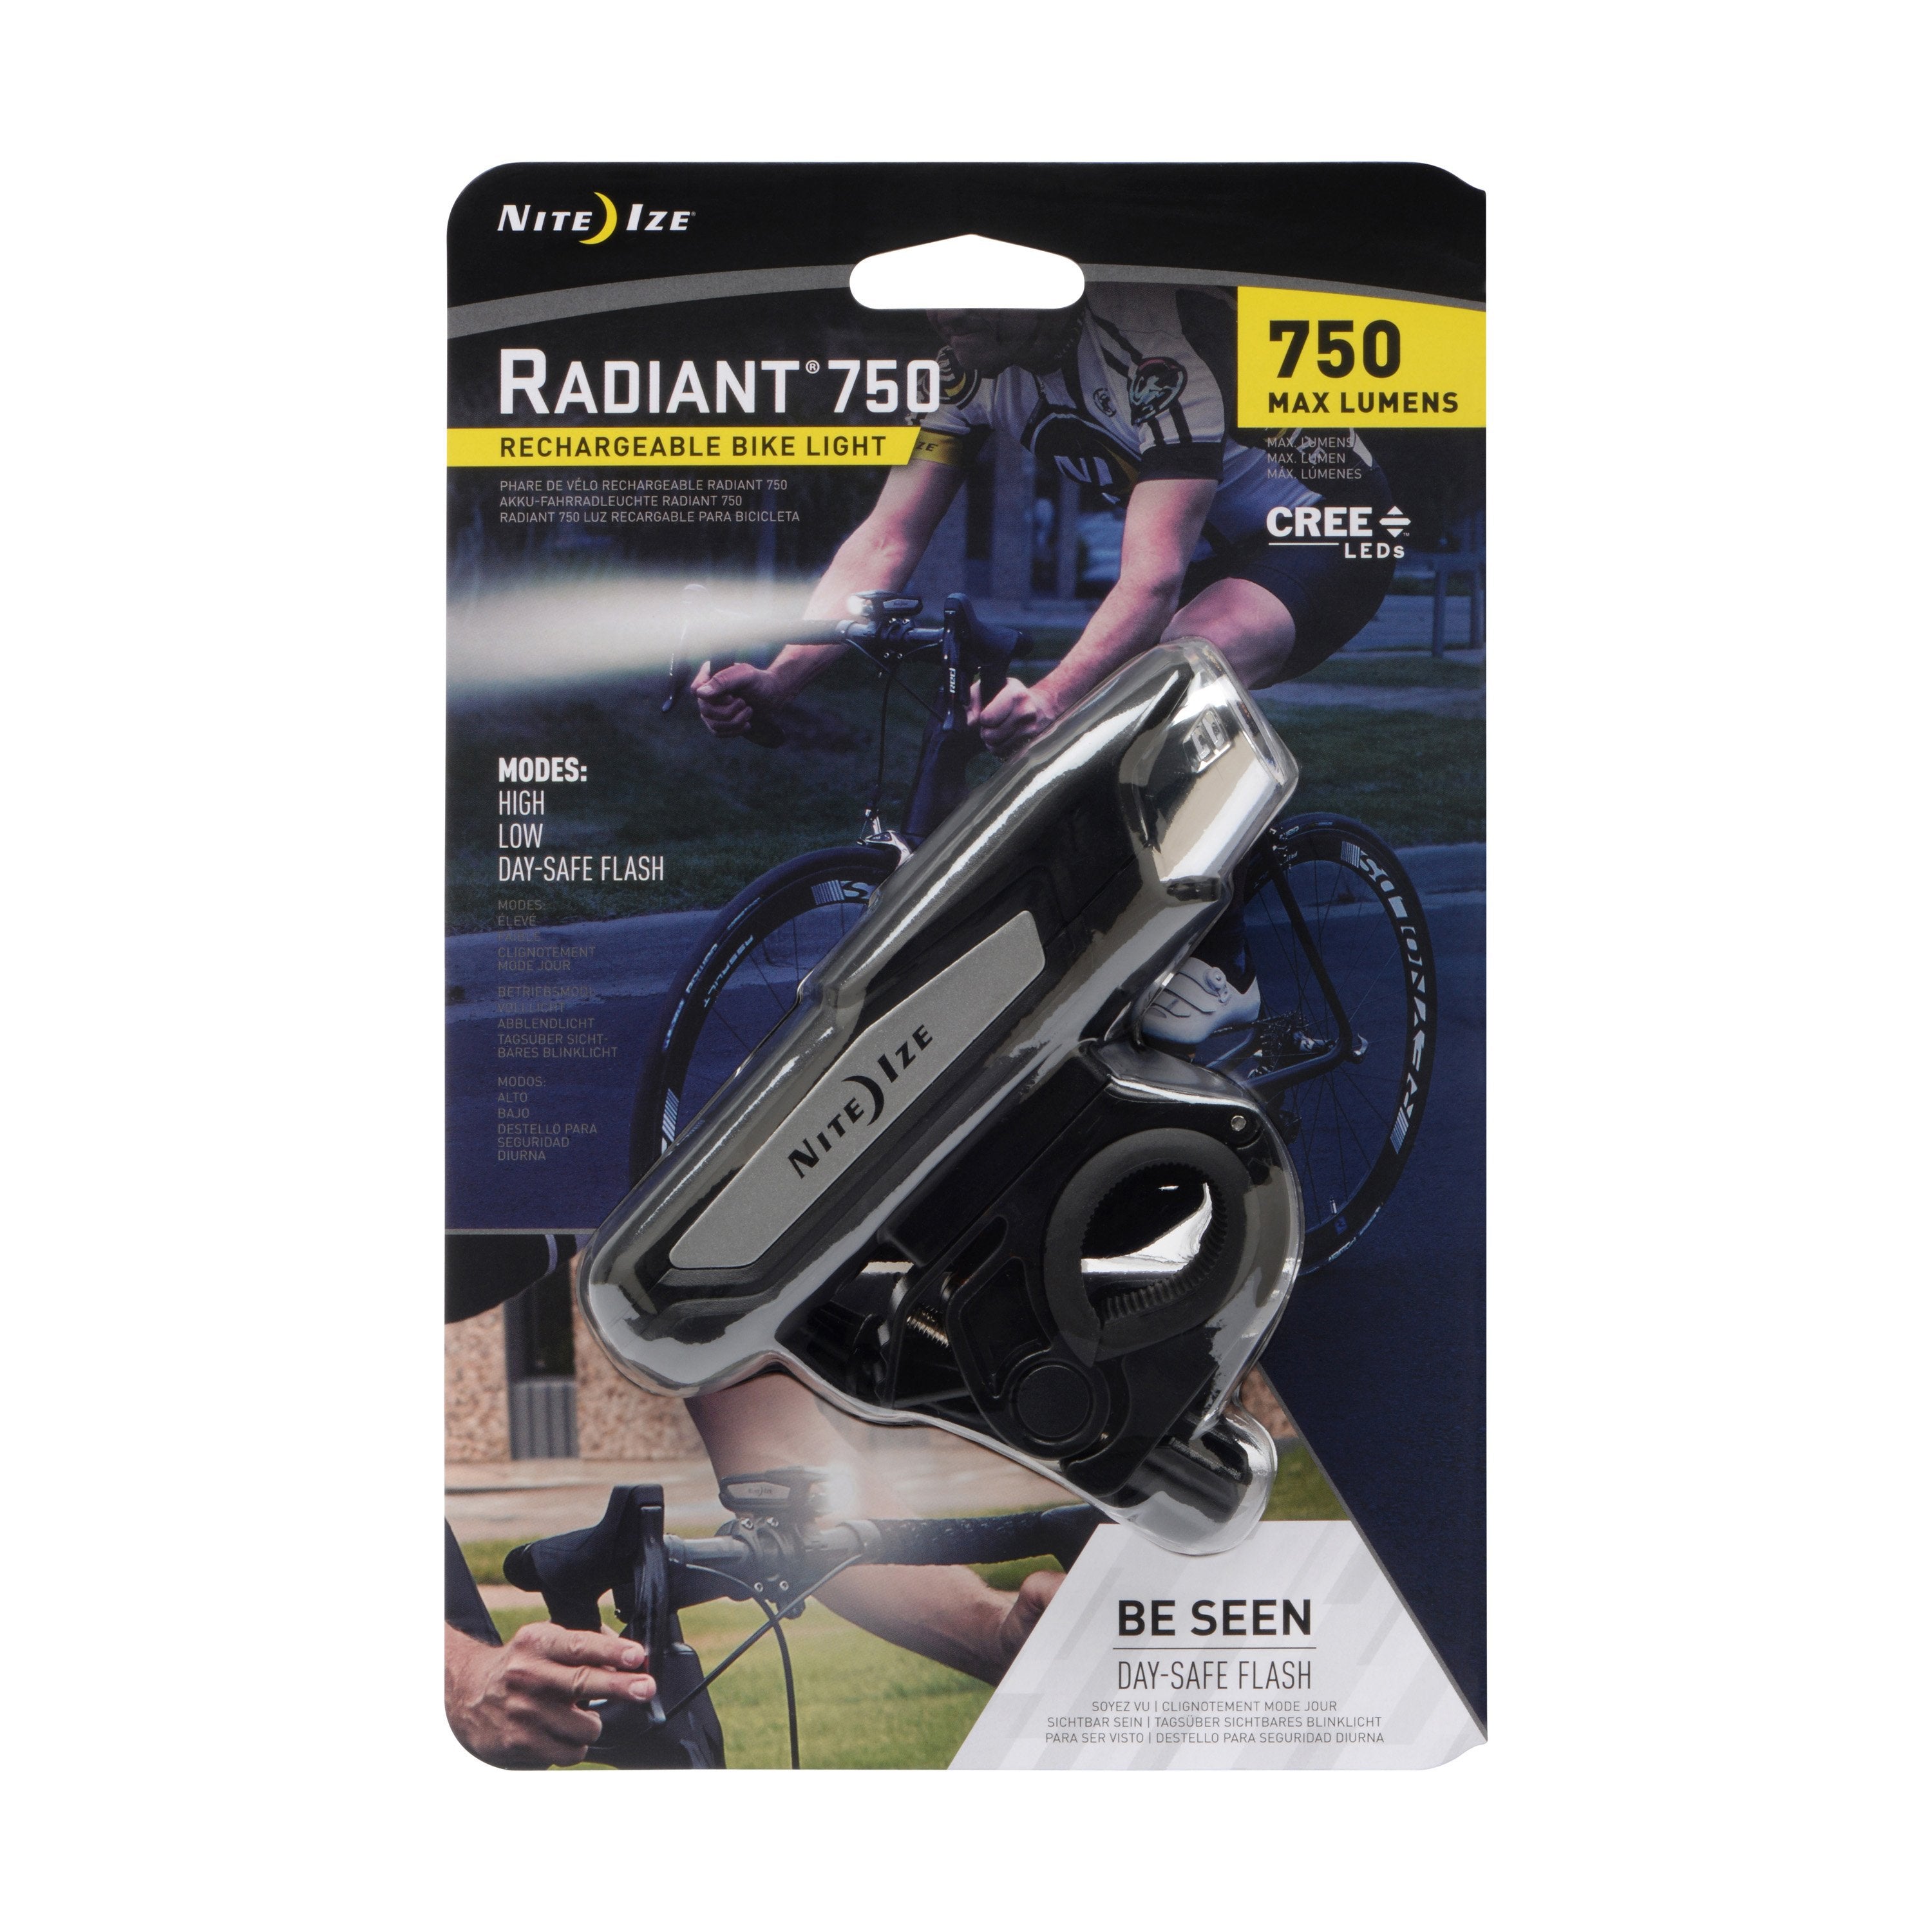 Radiant 750 Rechargeable Bike Light